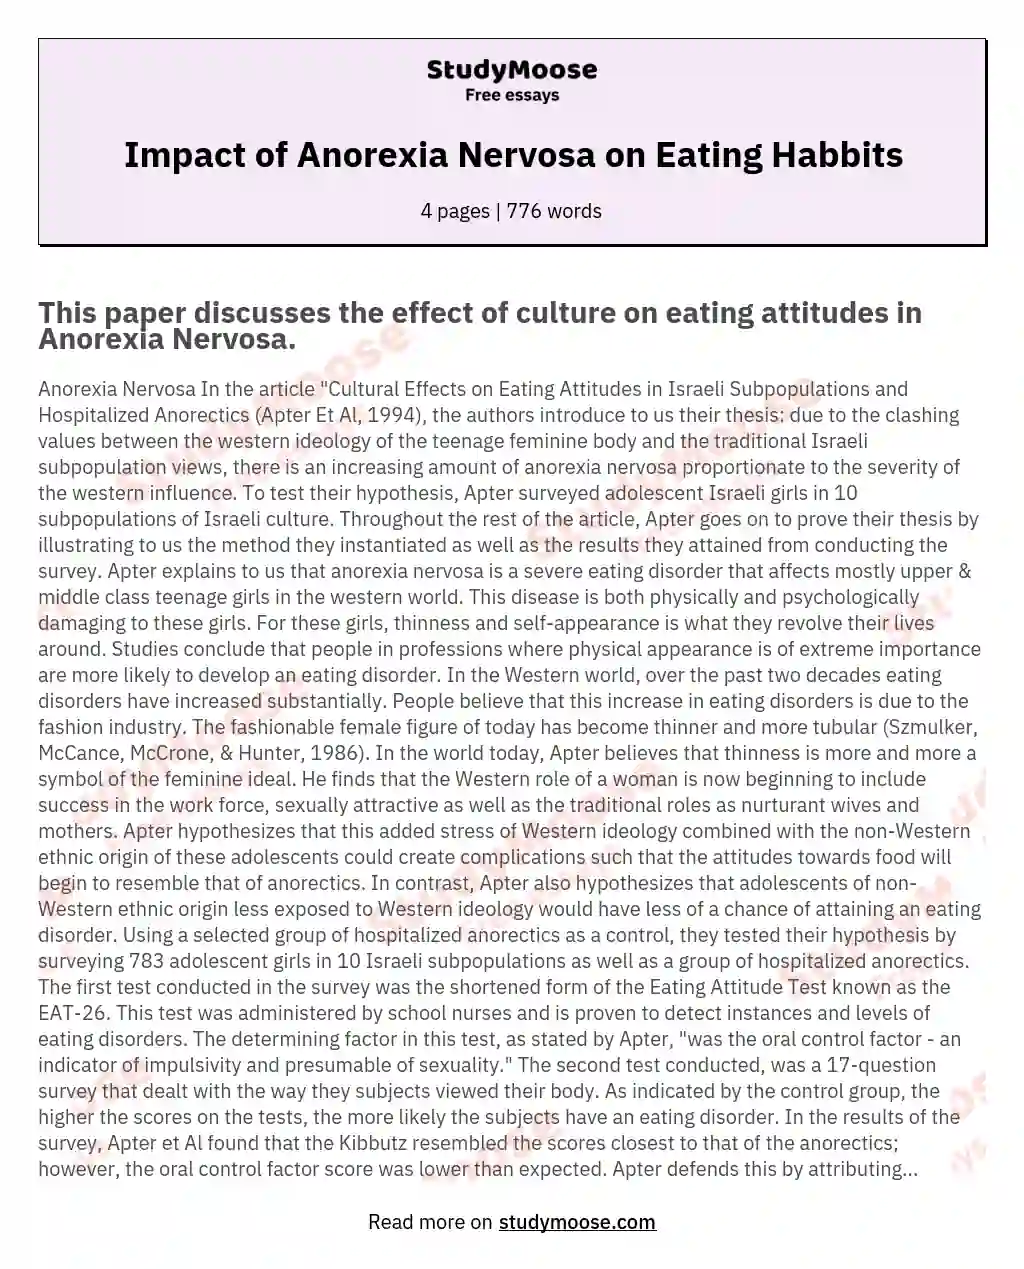 Impact of Anorexia Nervosa on Eating Habbits essay